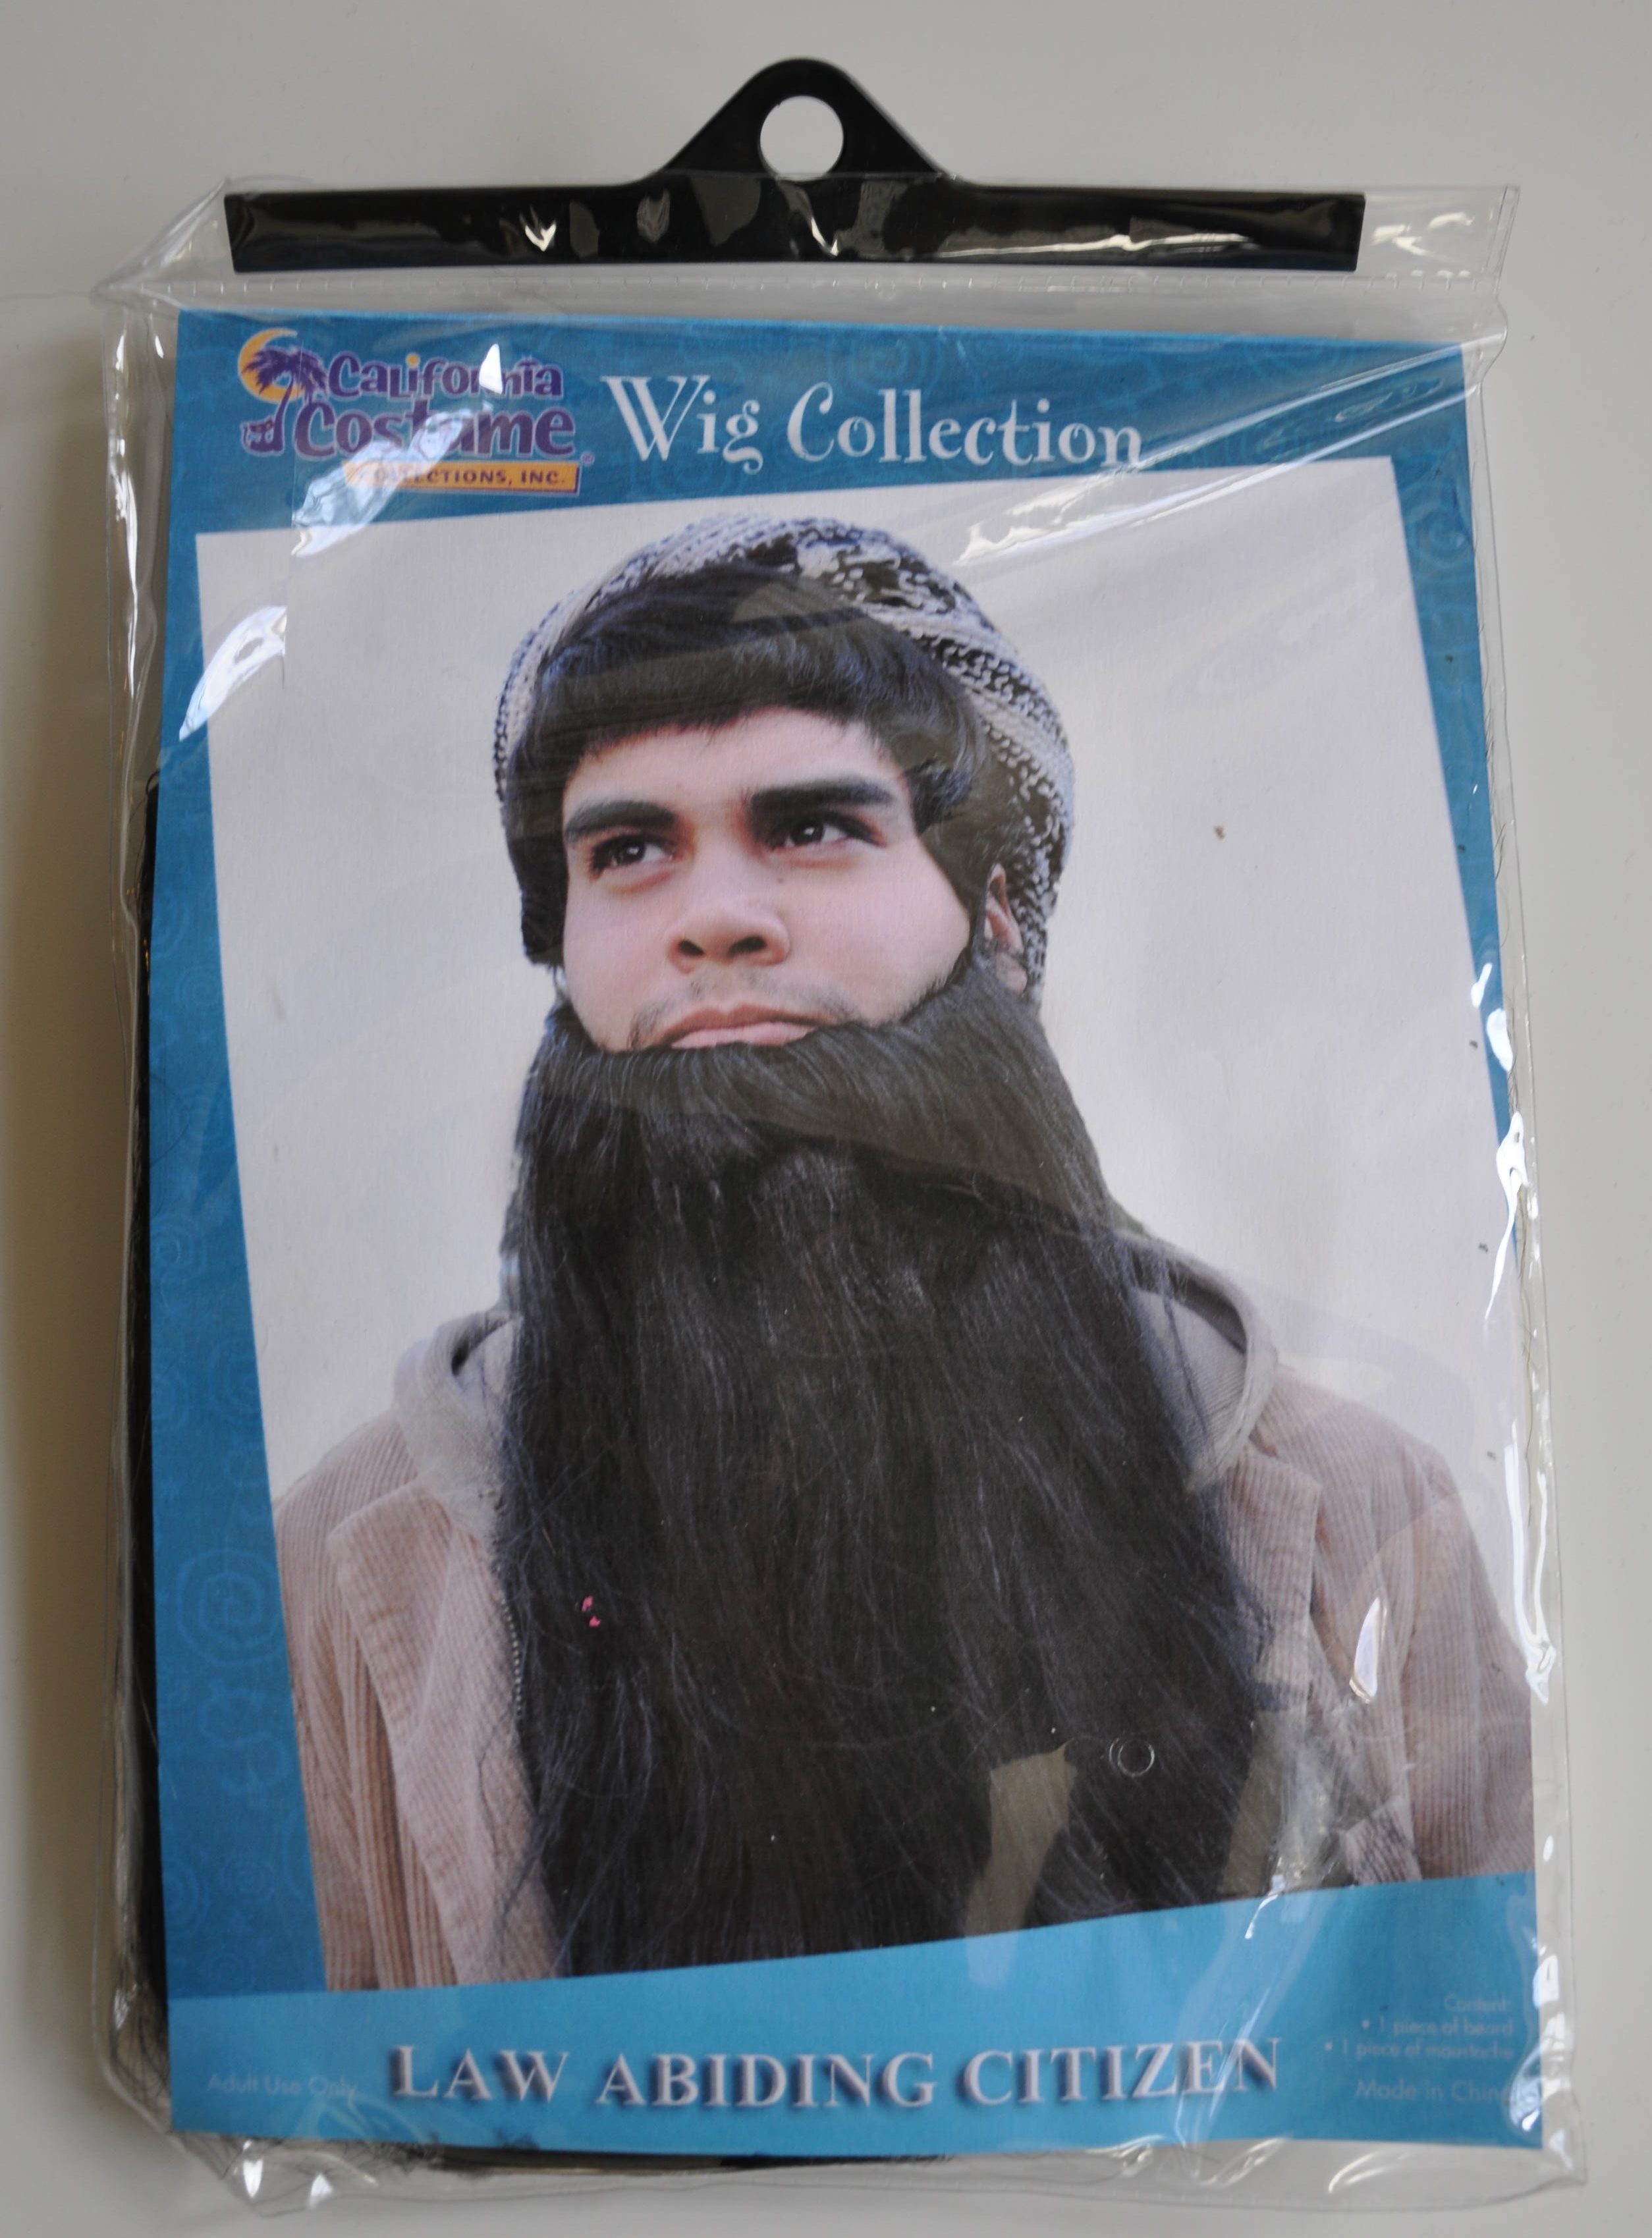 Wig Collection: Law Abiding Citizen